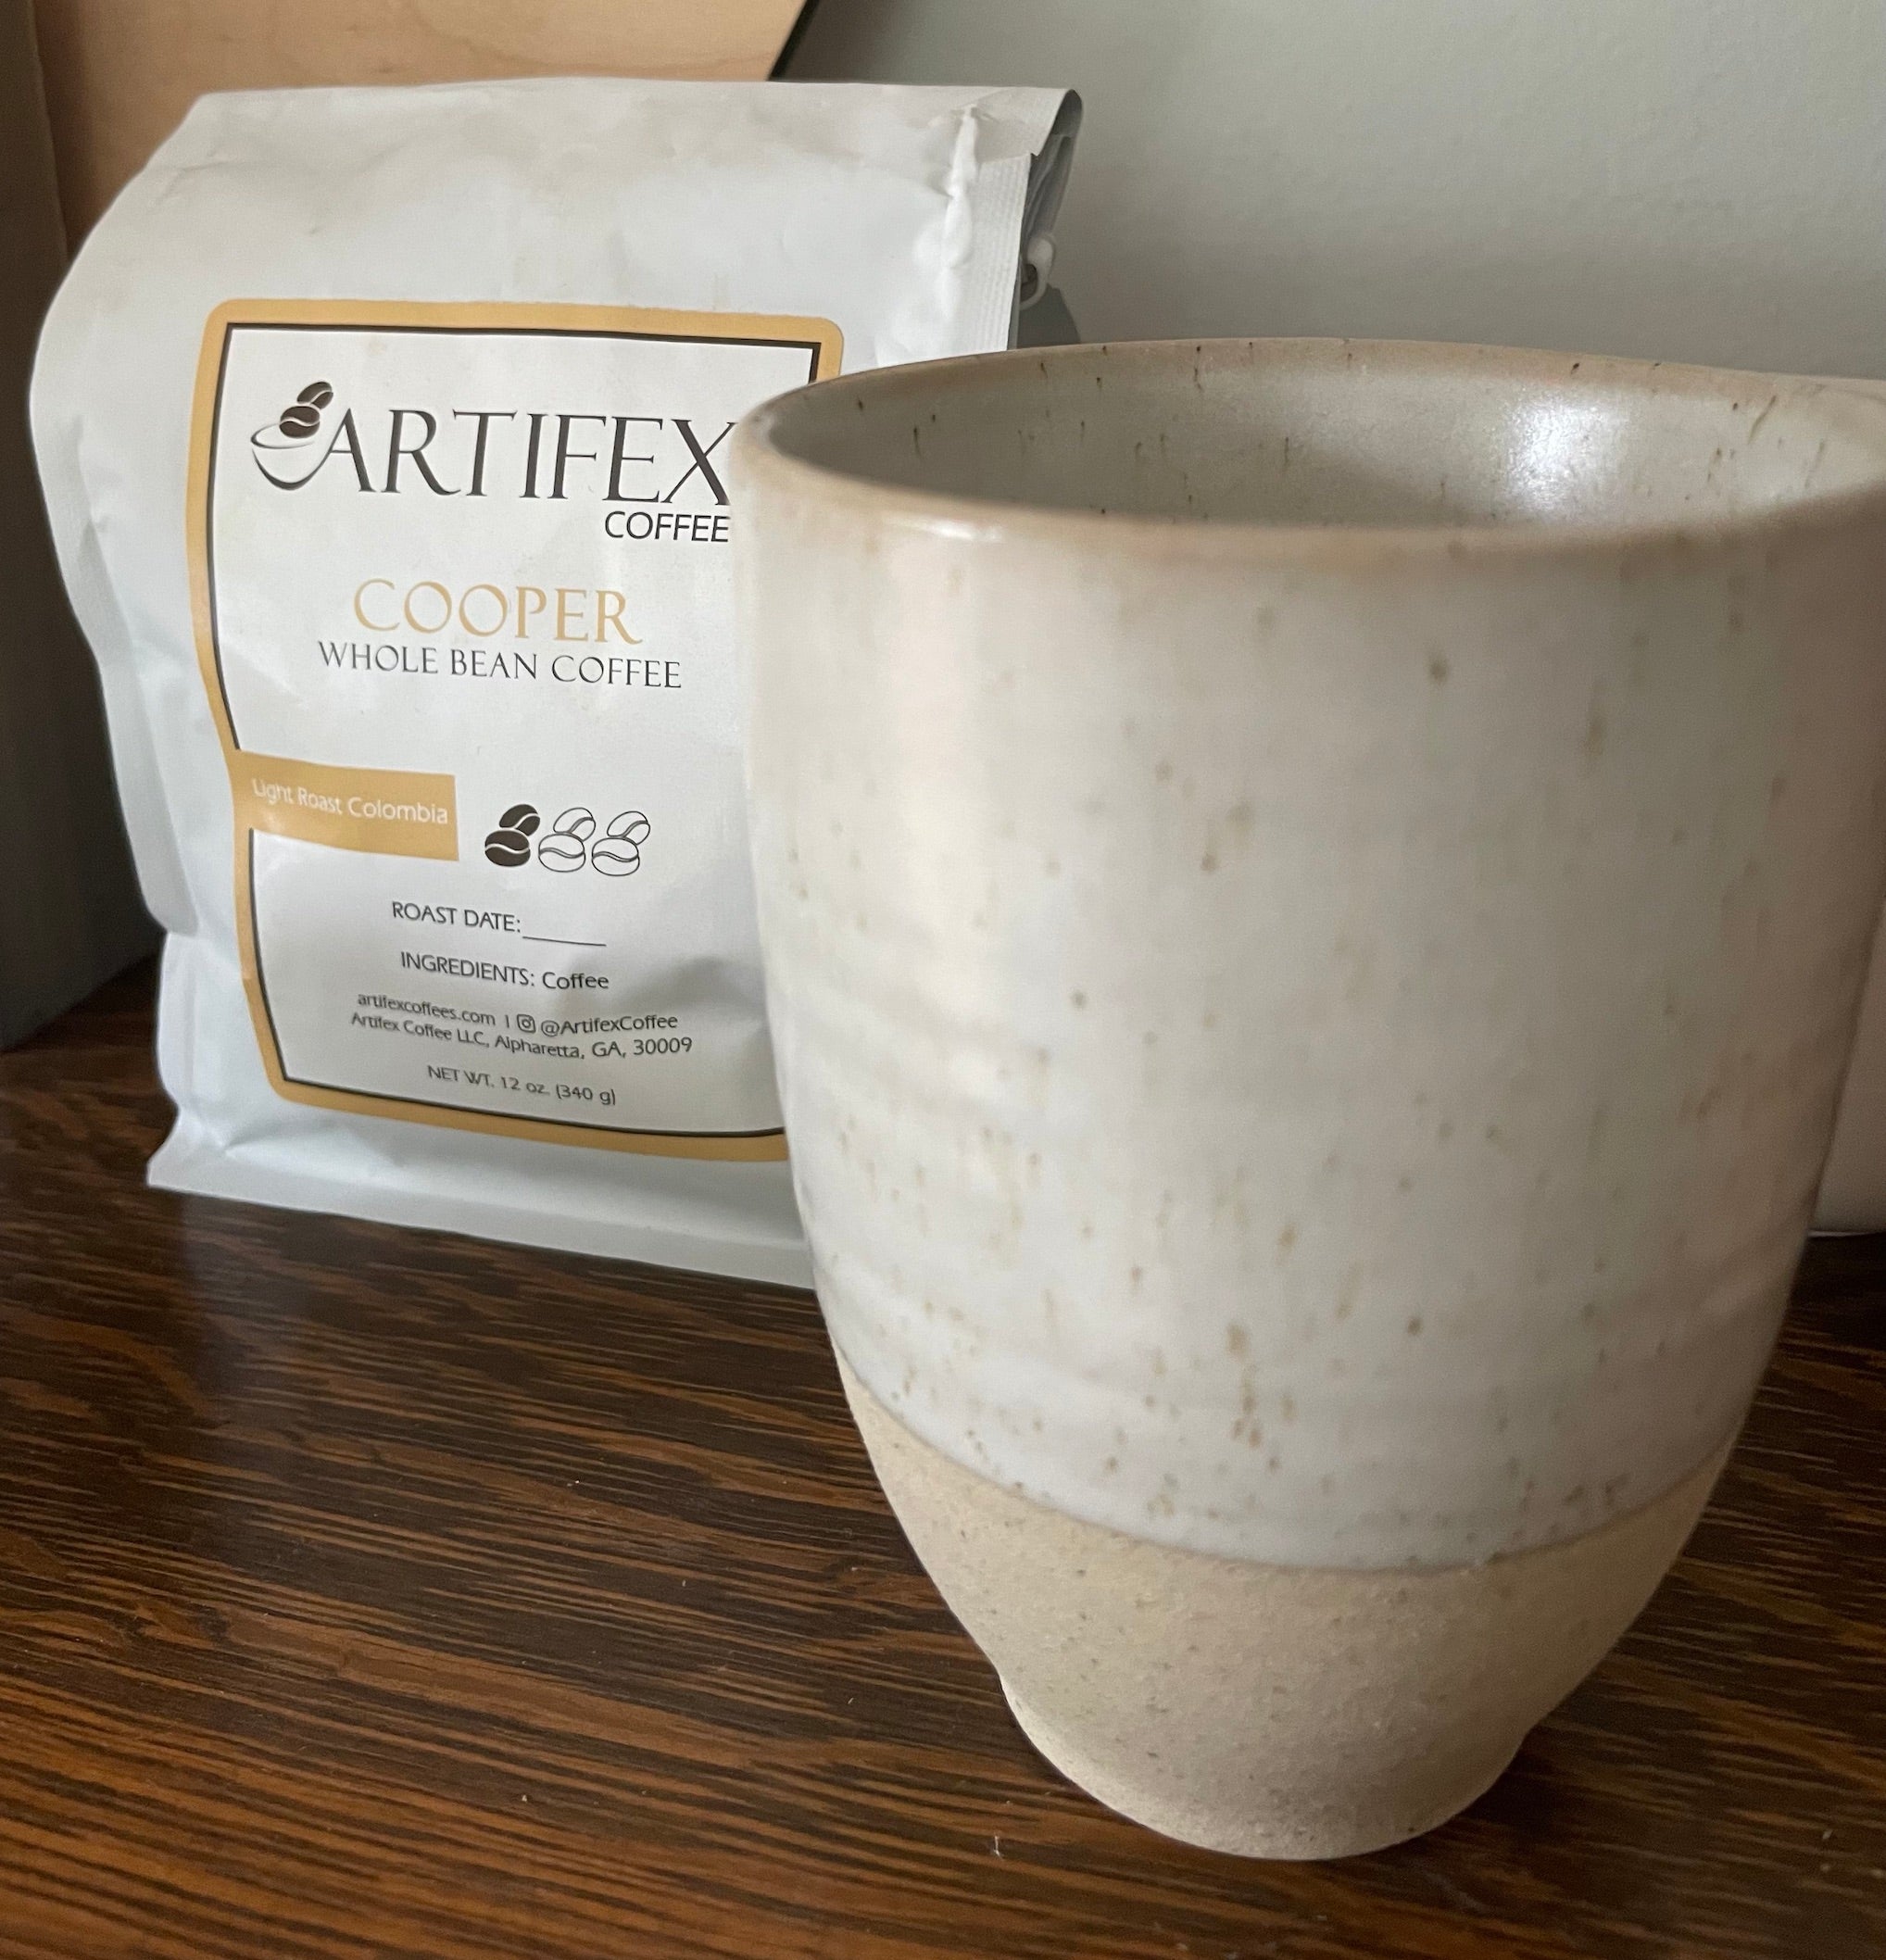 Mug  -  Stoneware cup, sans handle